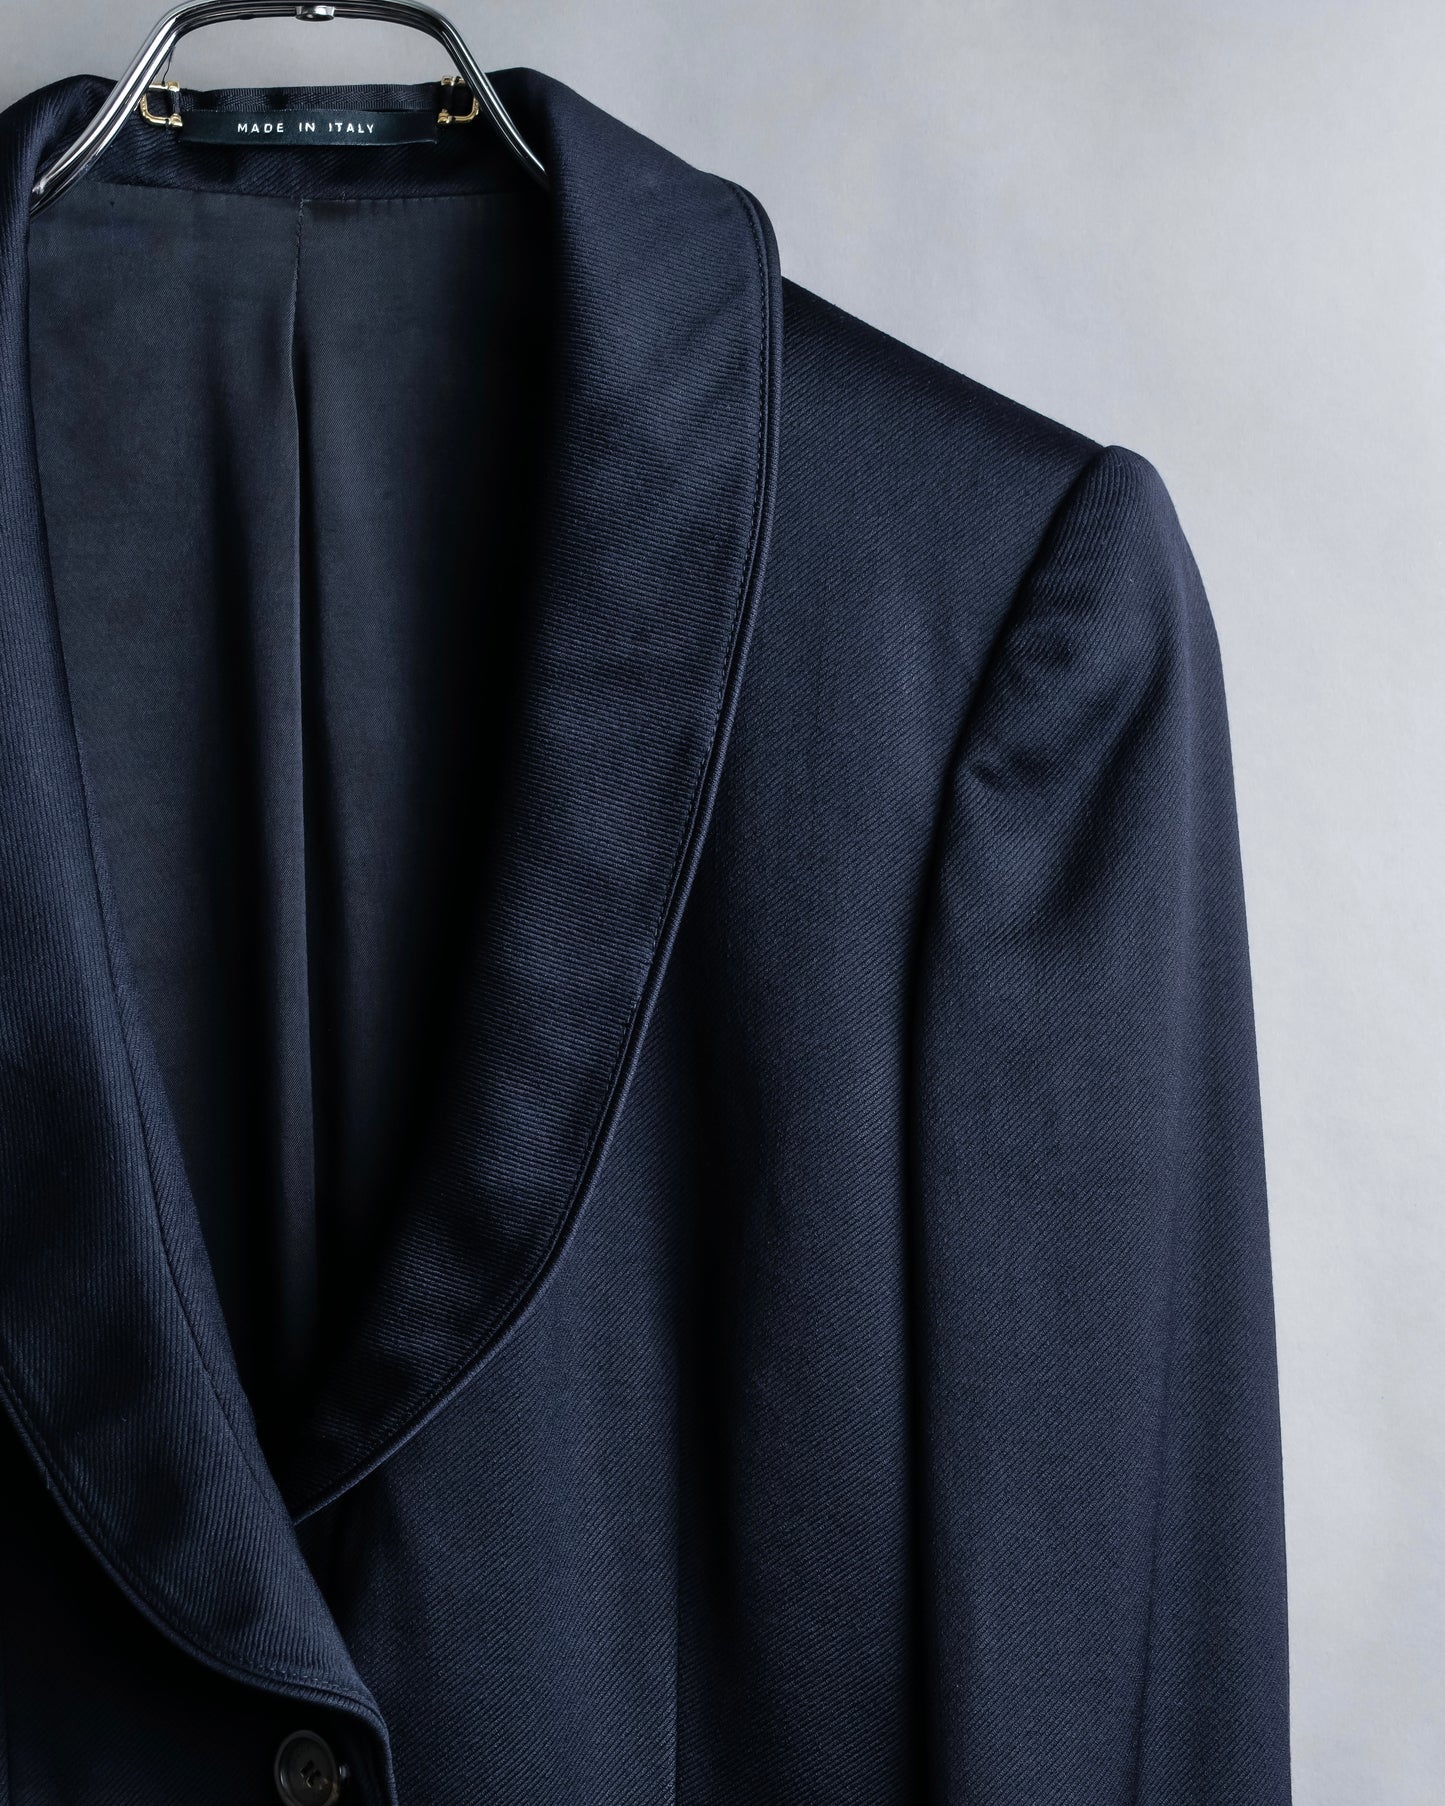 "GUCCI" Shawl collar glossy black jacket